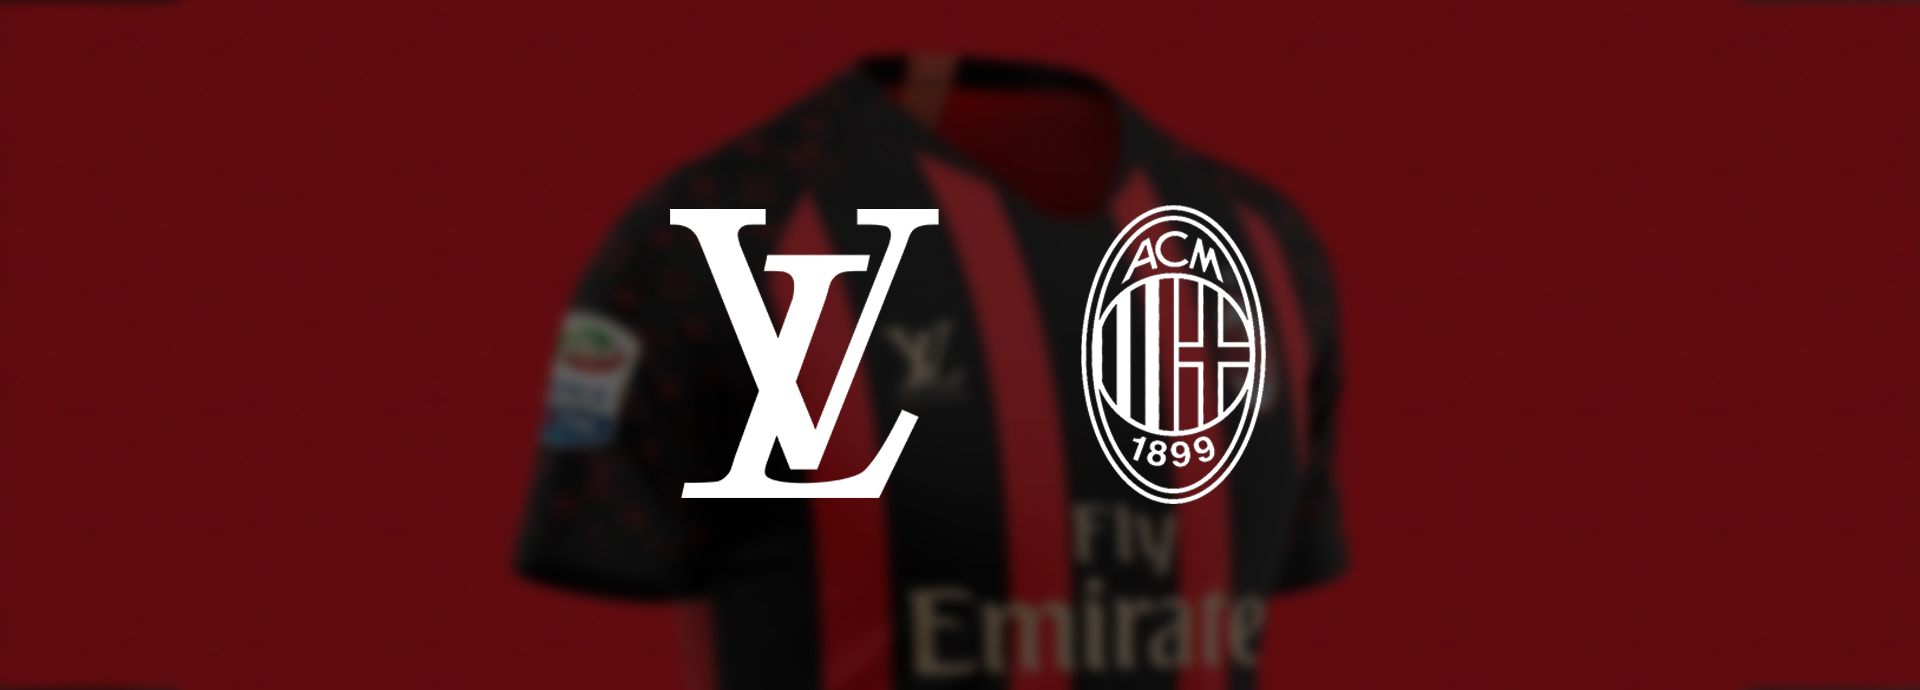 AC Milan x Louis Vuitton? - Lenders Magazine